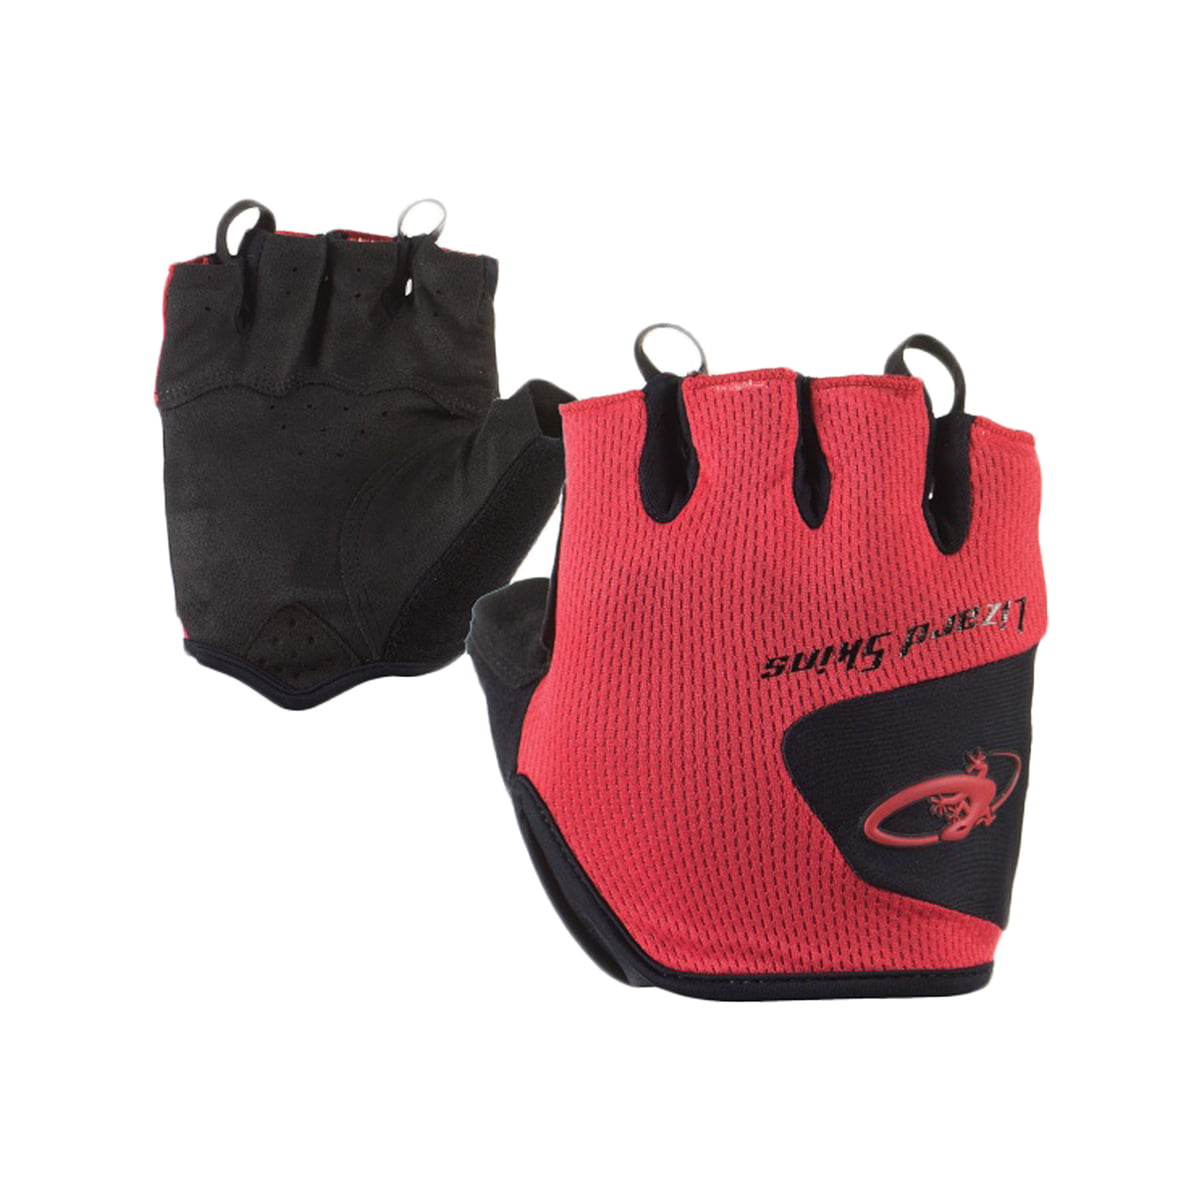 Crimson LG Lizard Skins Aramus GC Gloves 